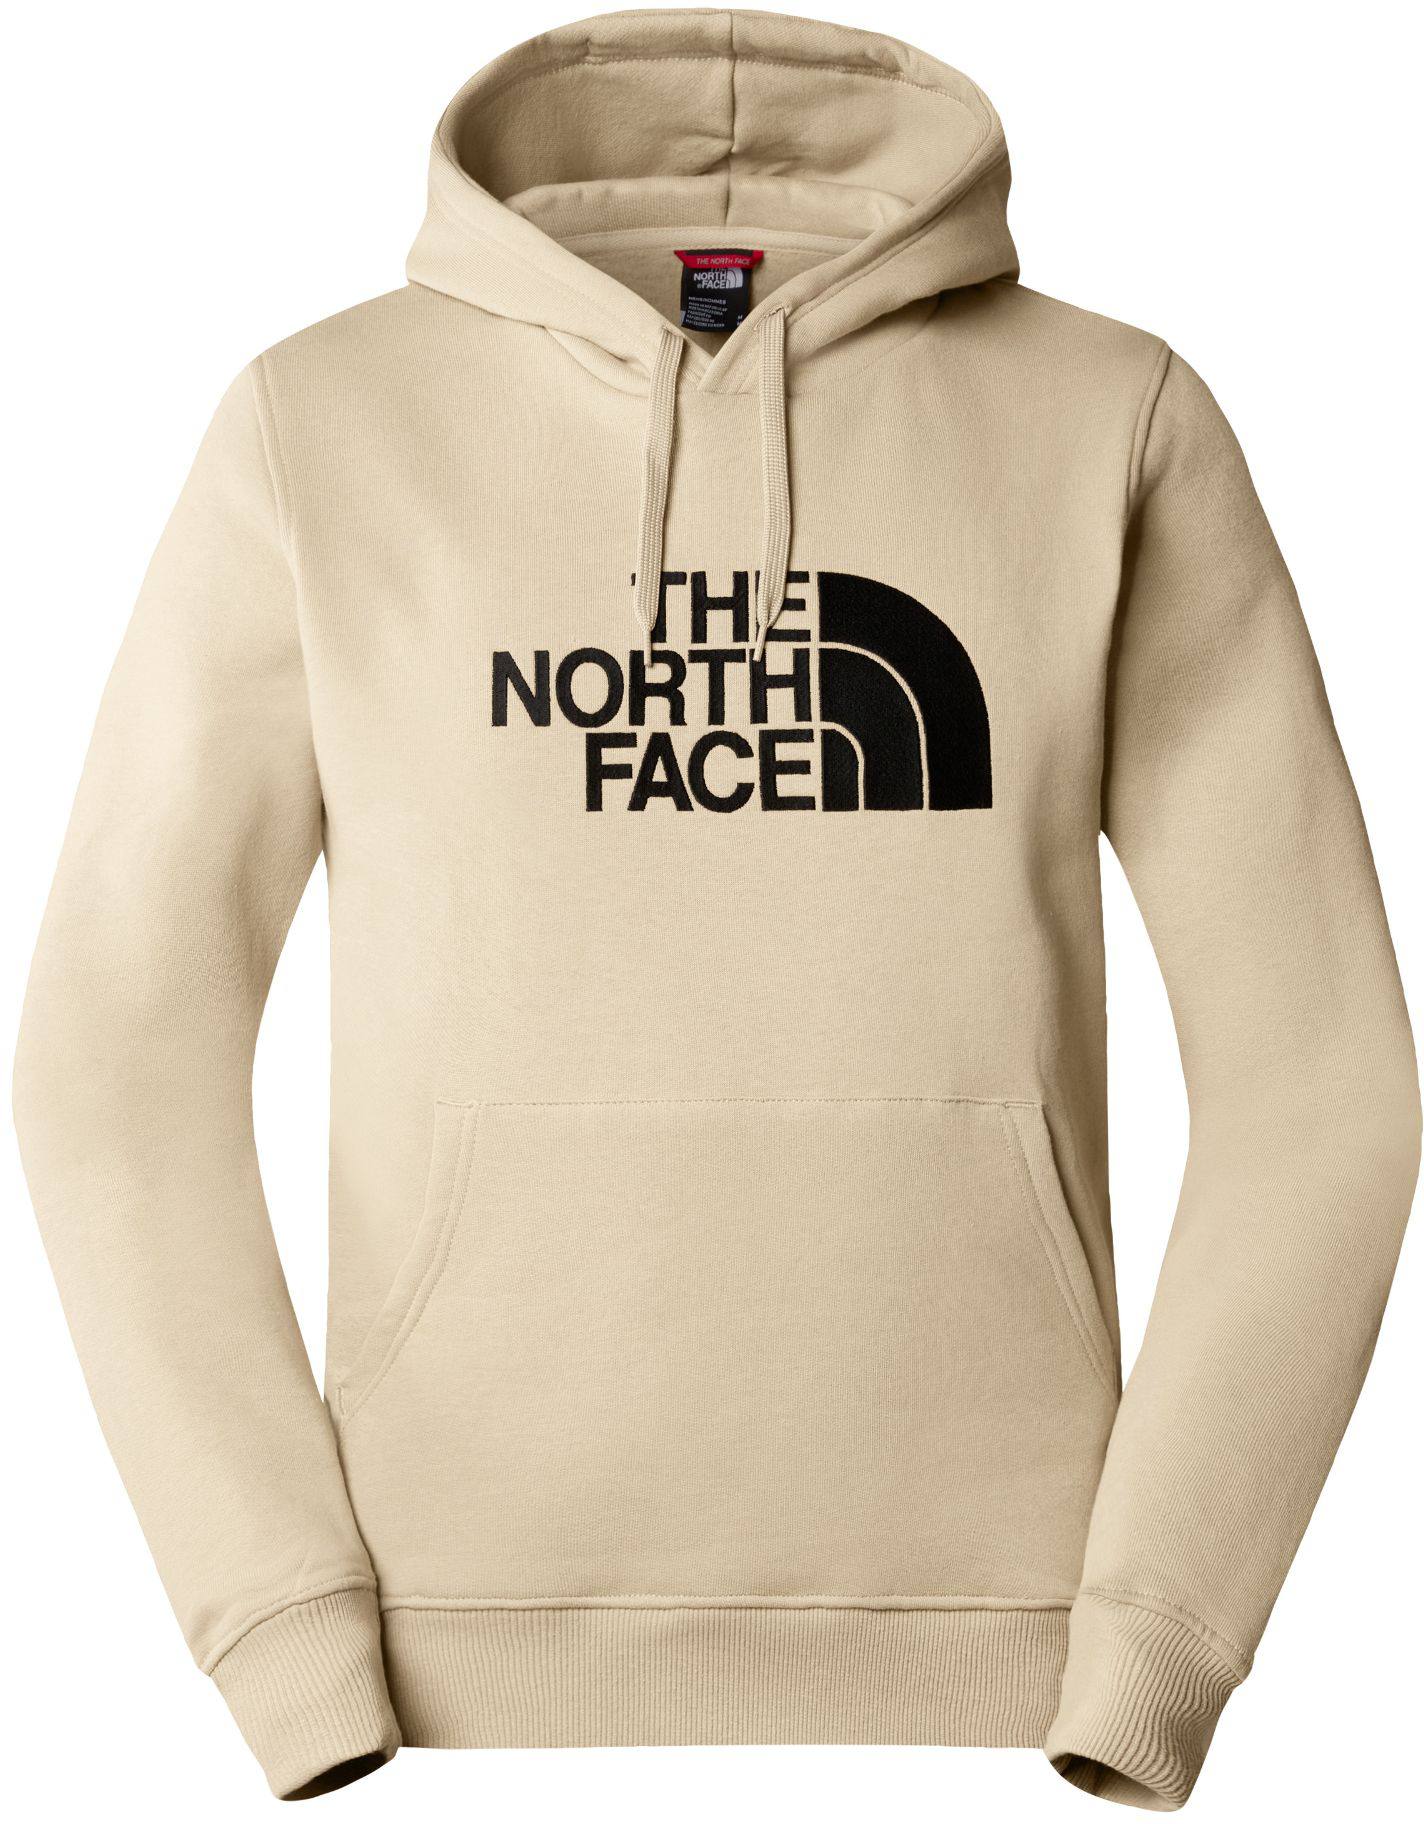 The North Face Men’s Drew Peak Pullover Hoodie